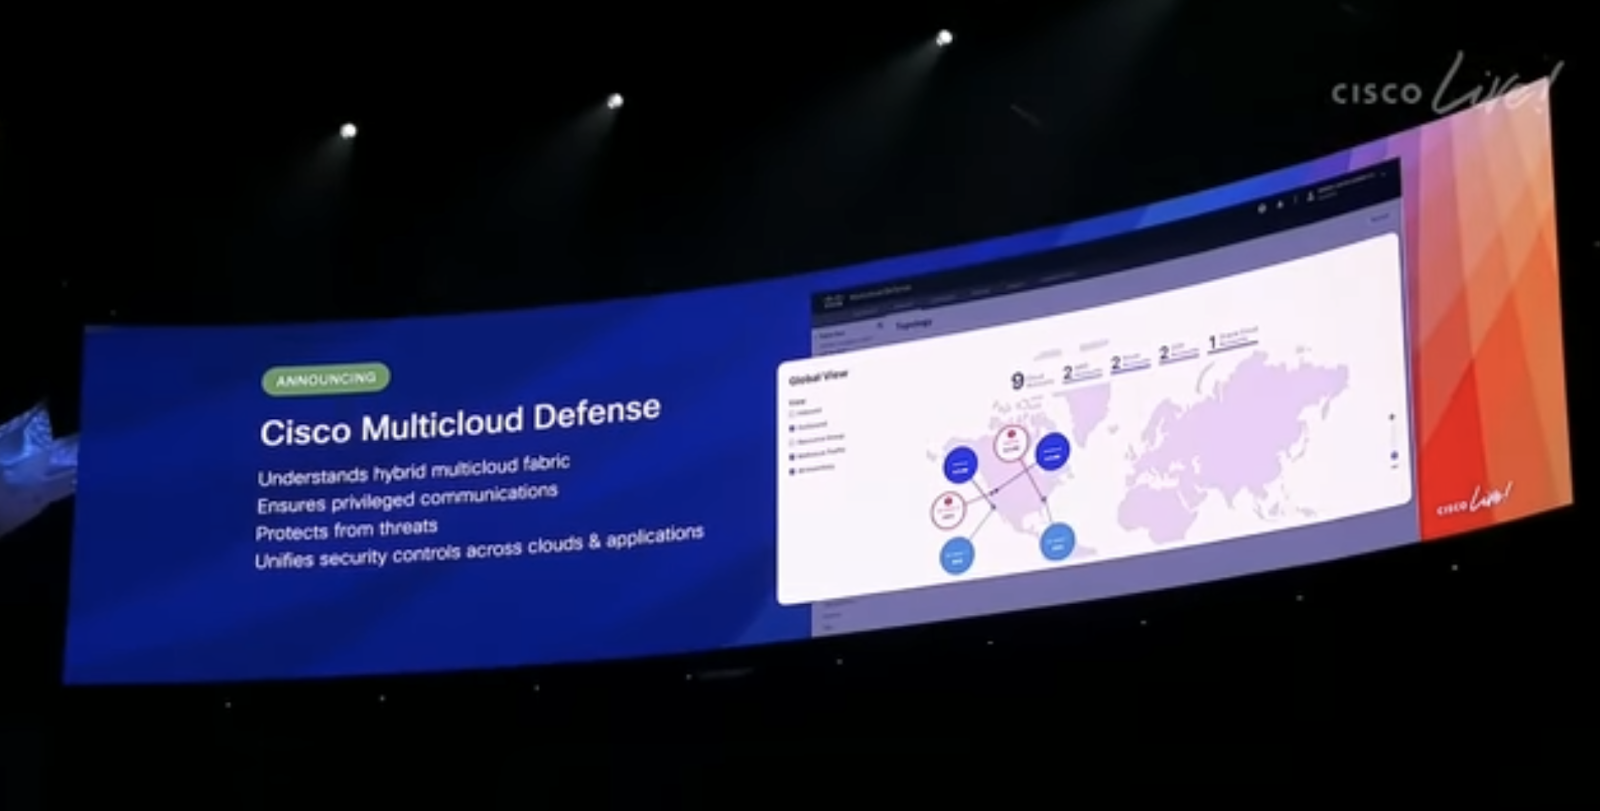 Announcing Cisco Multicloud Defense